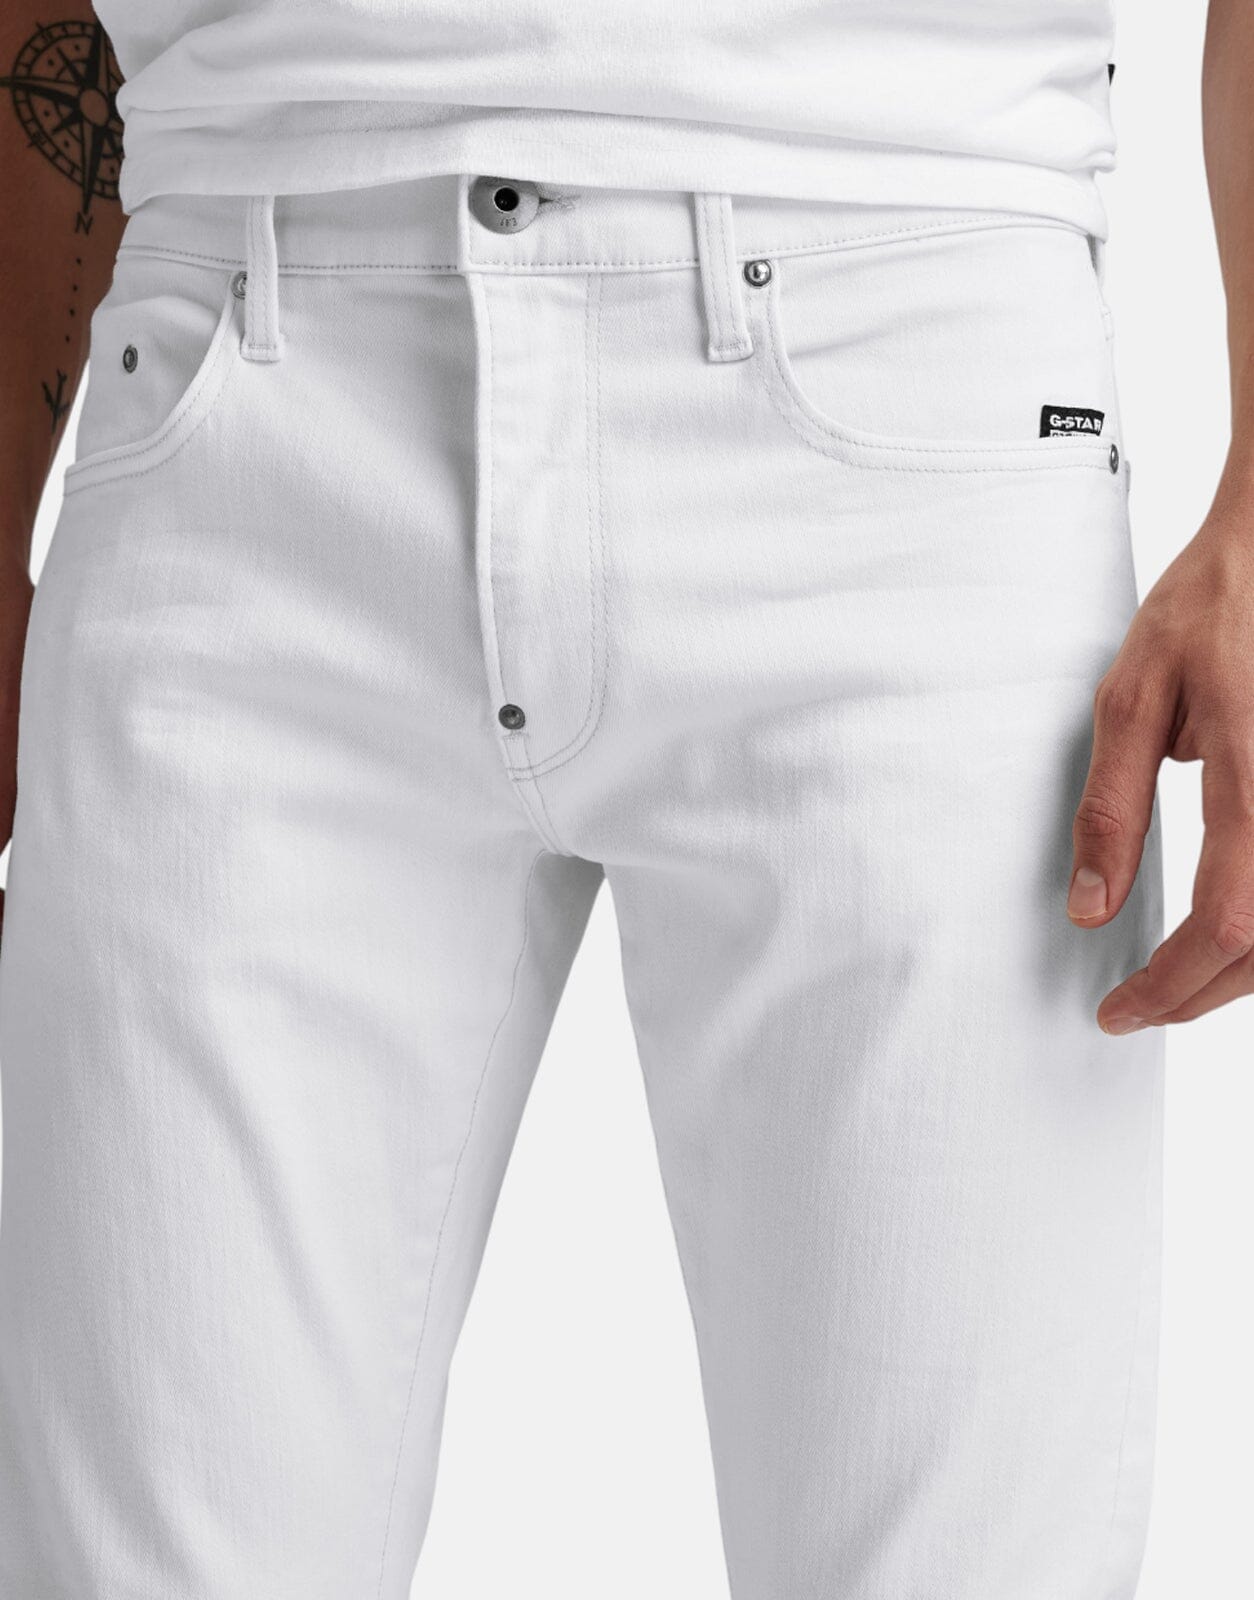 G-Star RAW Revend FWD Skinny Paper White - Subwear